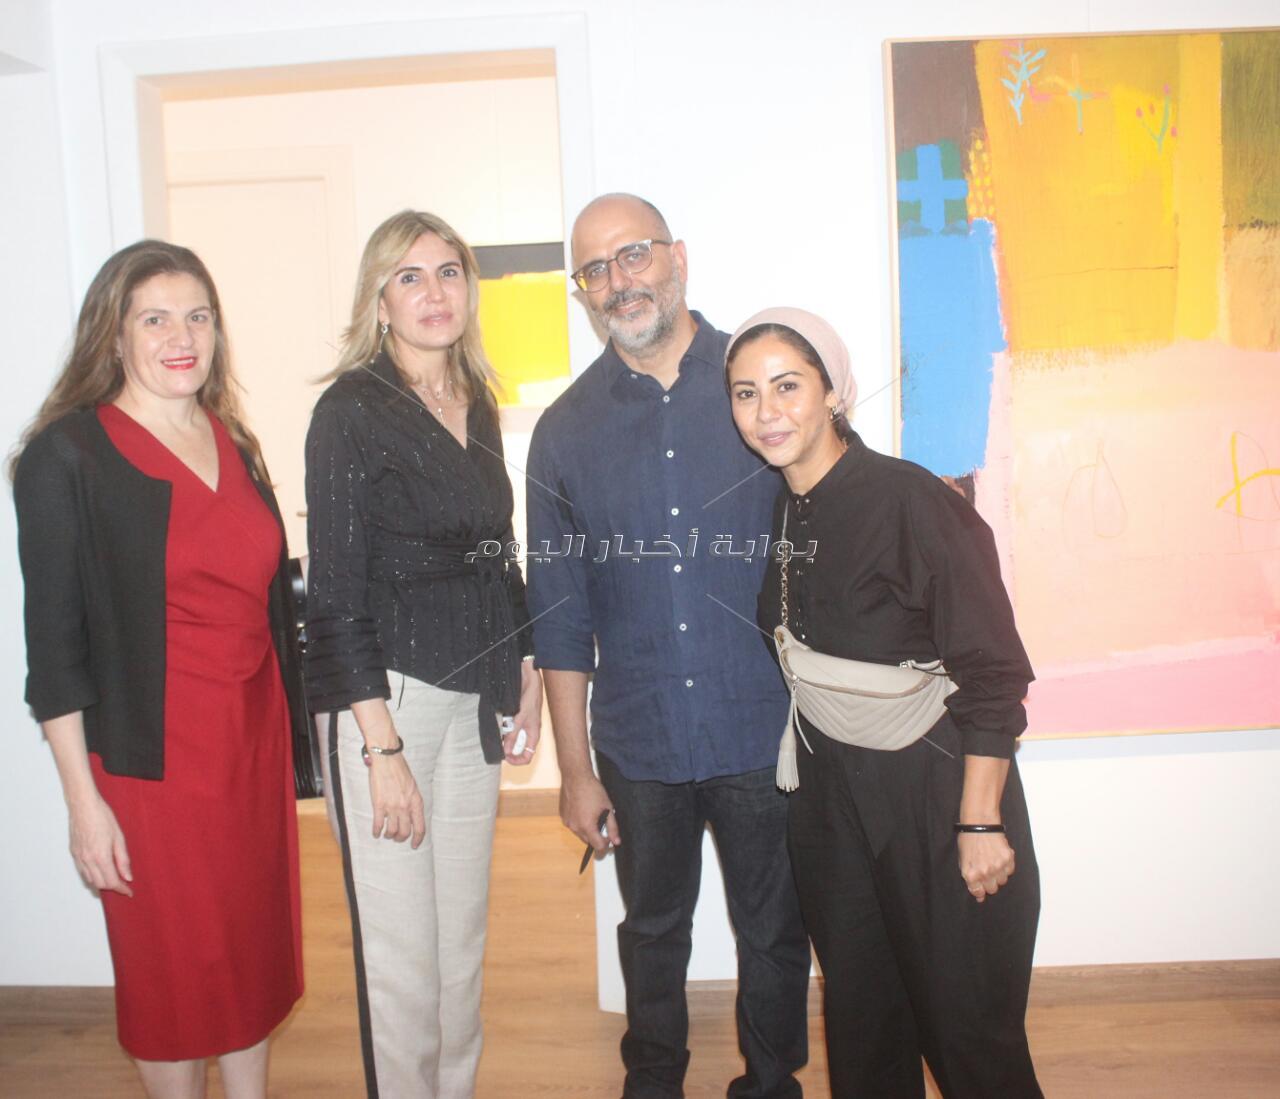 ميس حمدان تشارك في افتتاح معرض وليد طاهر